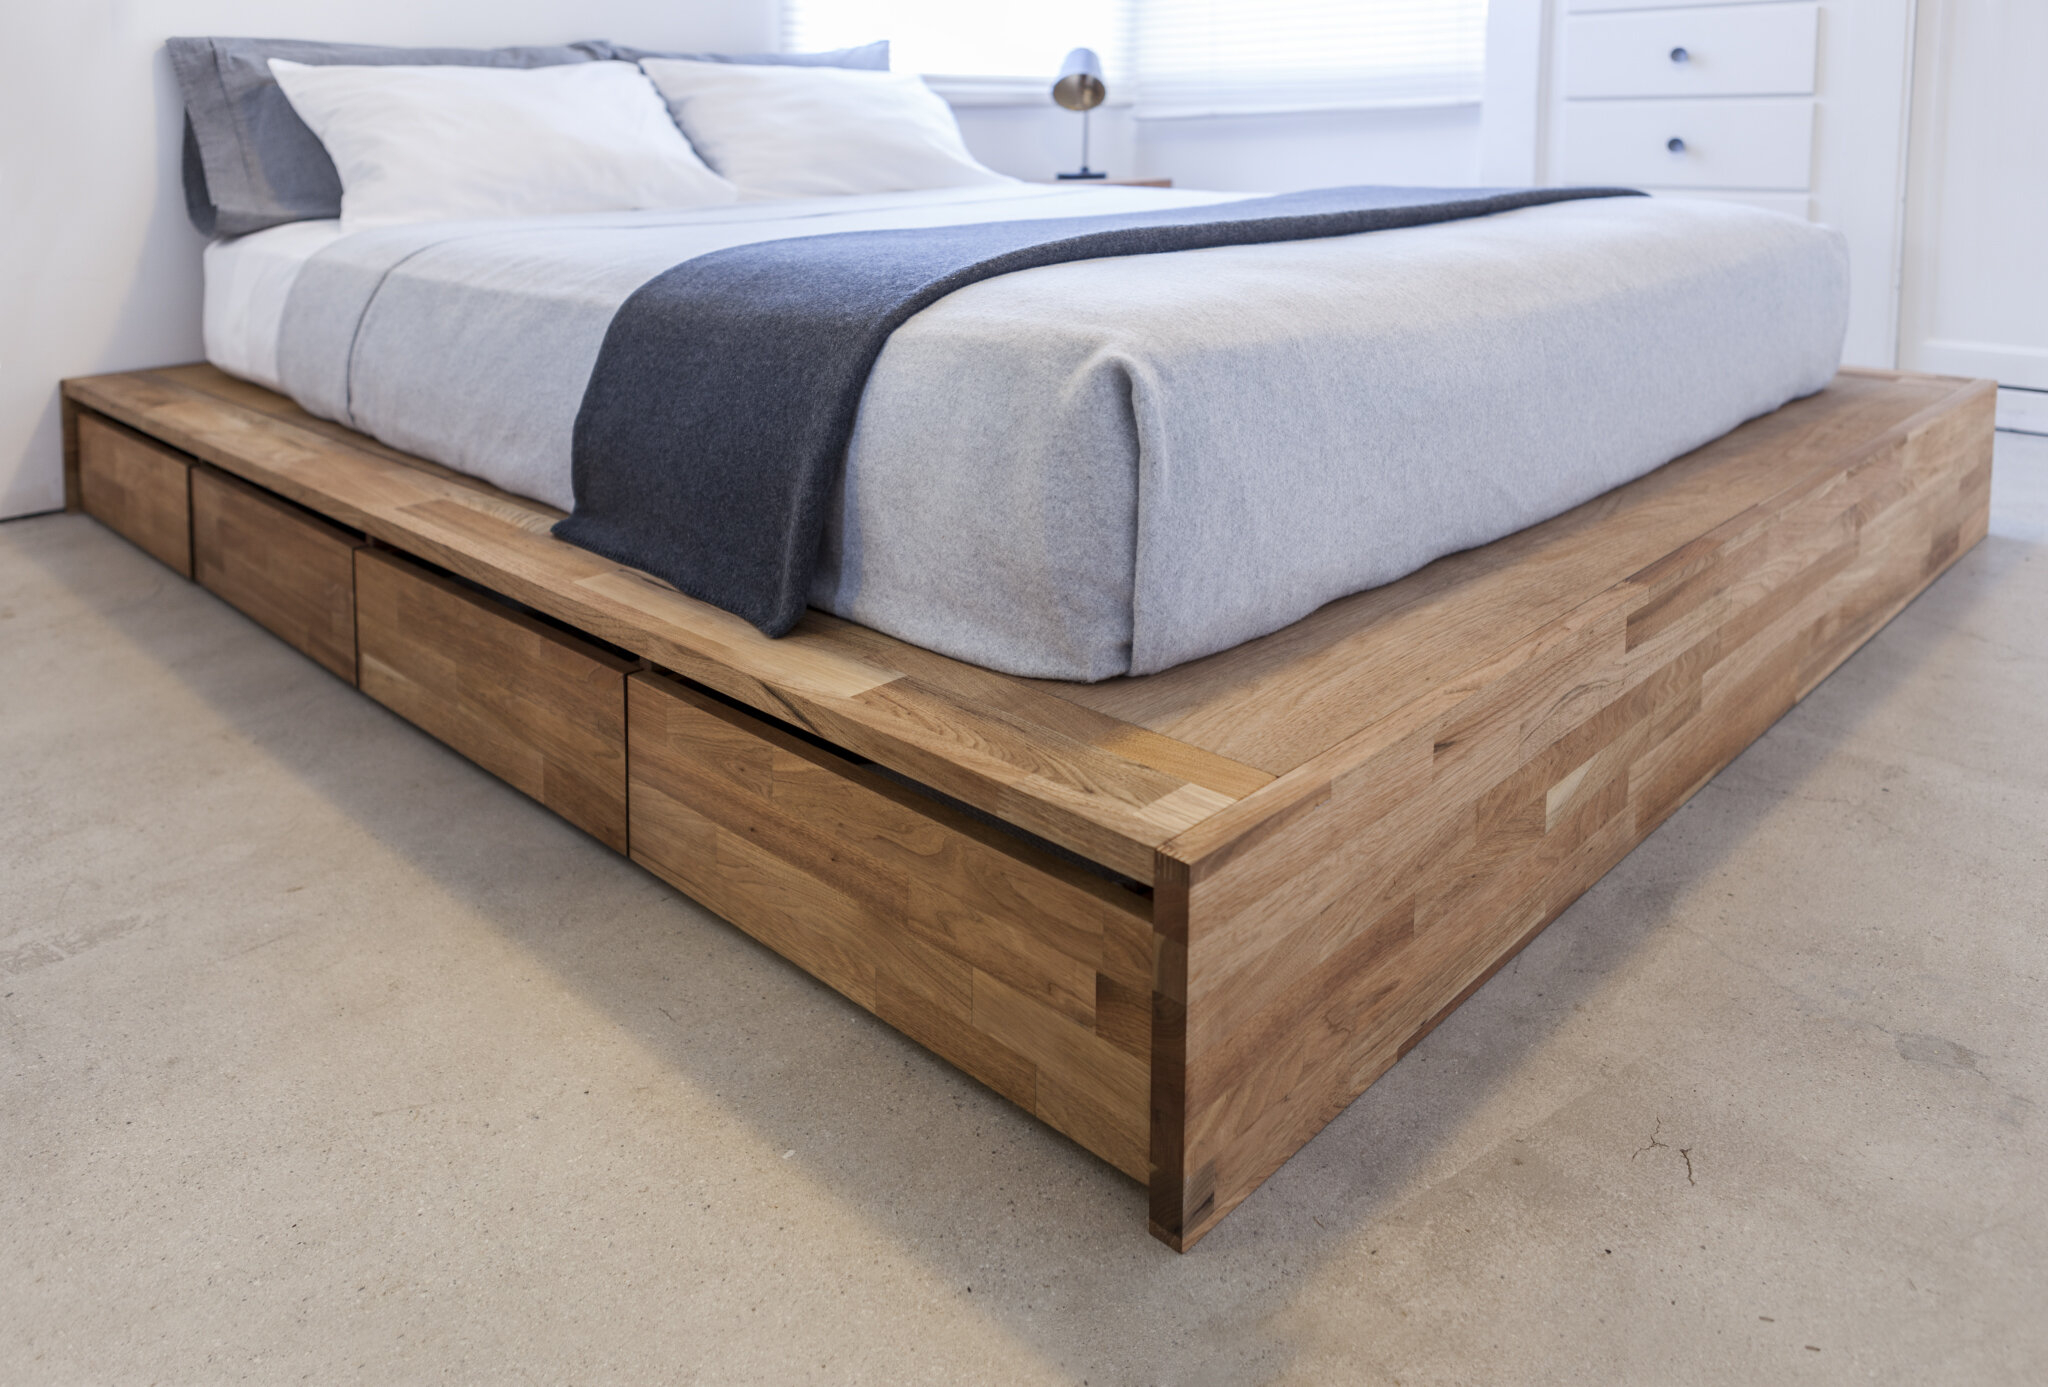 Bed With Storage Underneath Visualhunt, Full Bed Storage Underneath